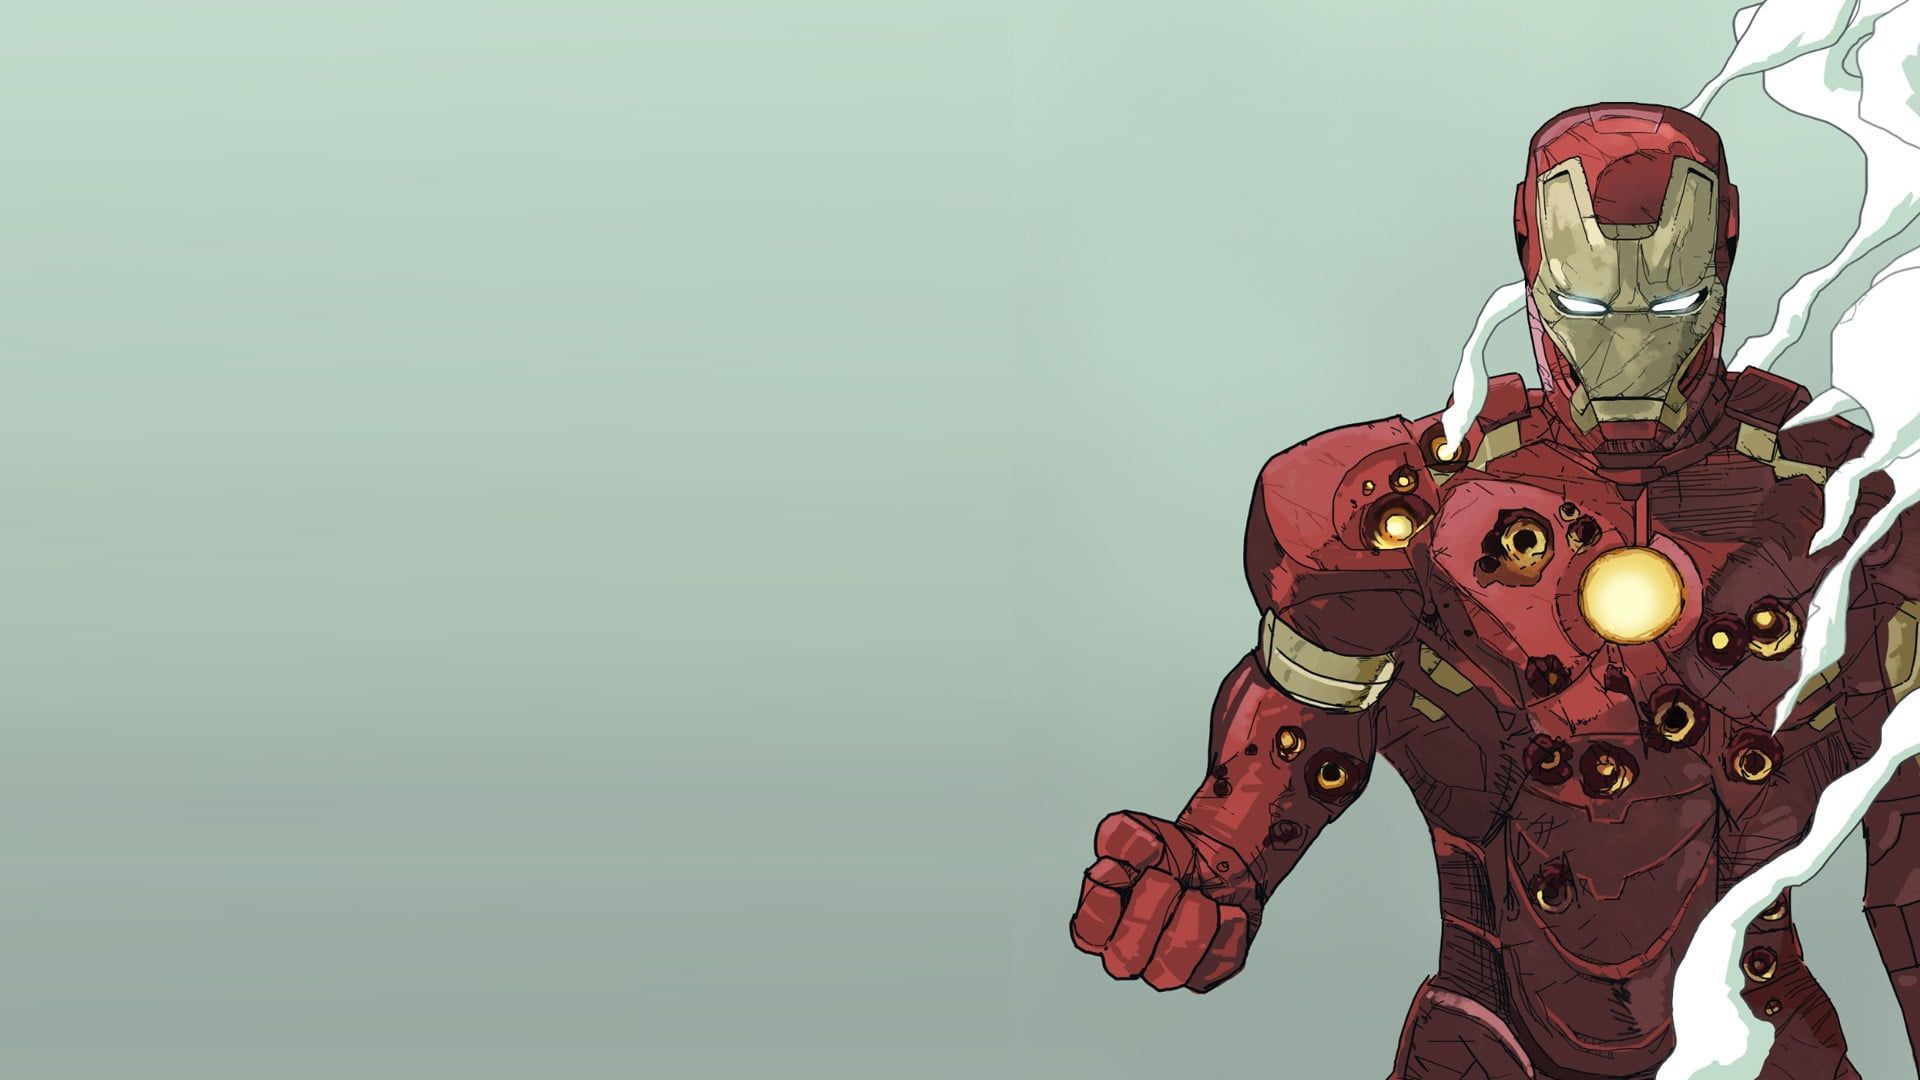  Iron Man Hintergrundbild 1920x1080. Iron Man digital wallpaper, Marvel Comics, copy space, machinery. 마블 바탕화면, 아이언 맨, 배경화면